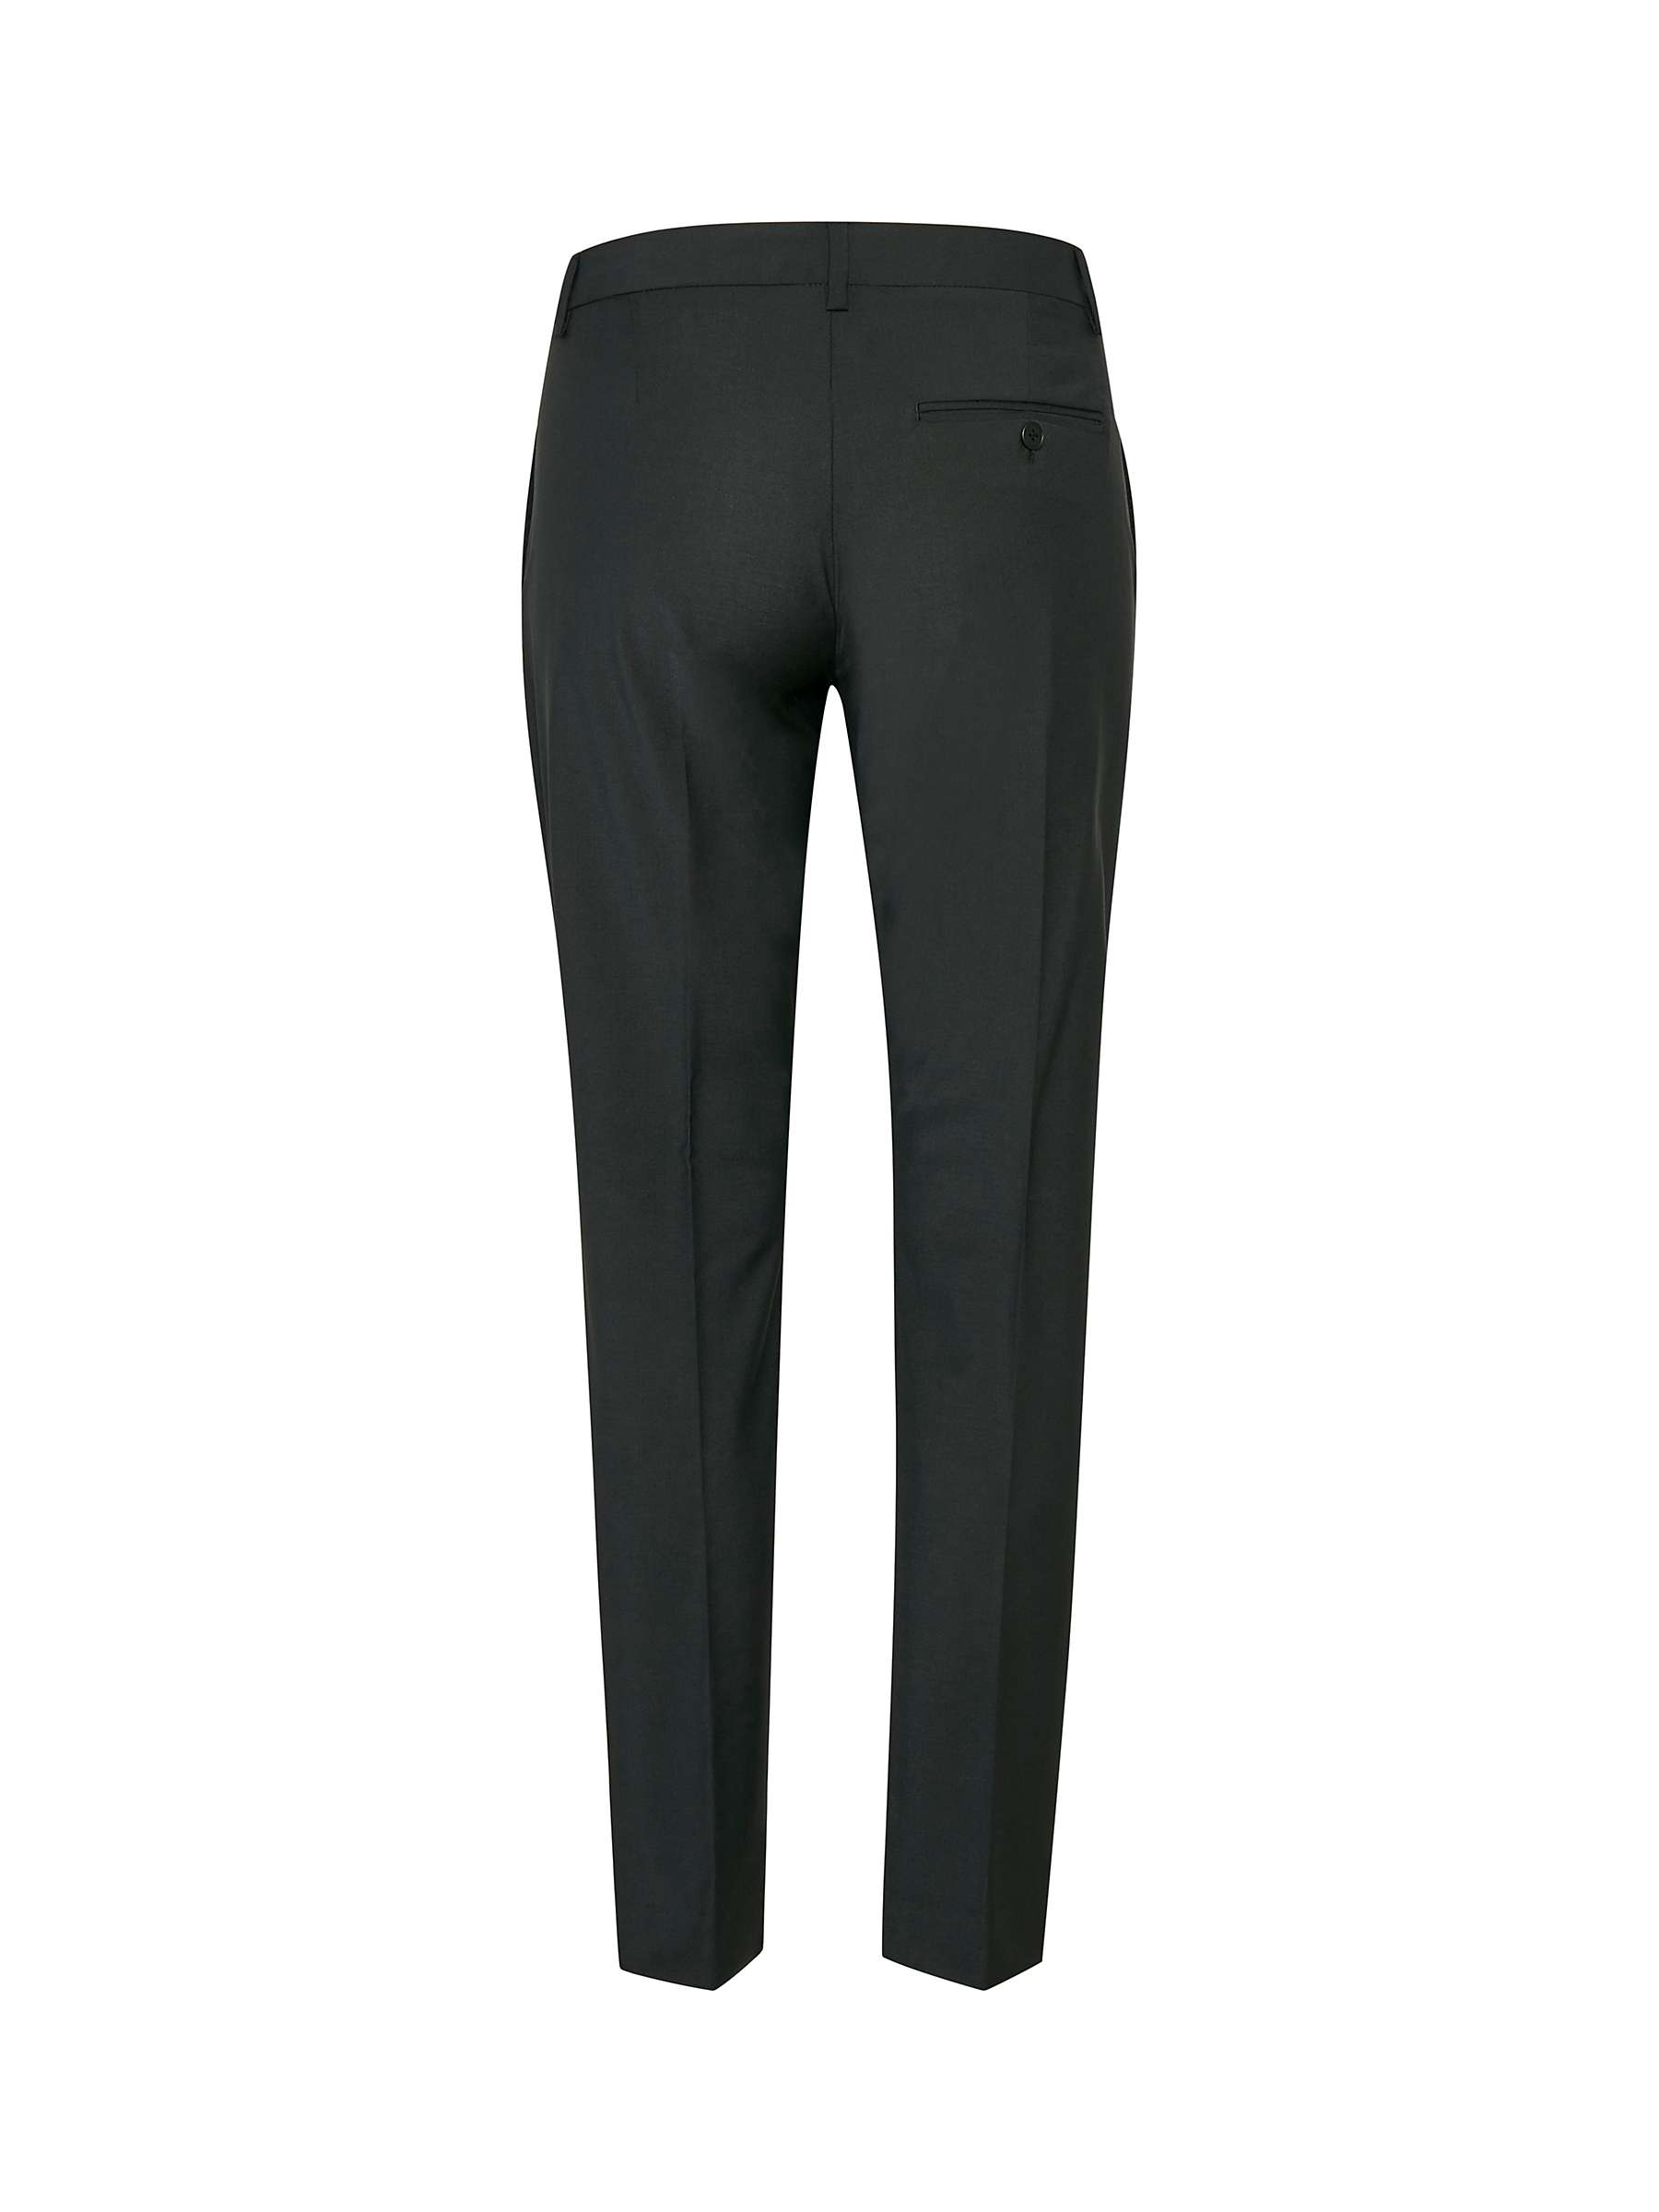 Buy InWear Kinsa Straight Trousers, Black Online at johnlewis.com